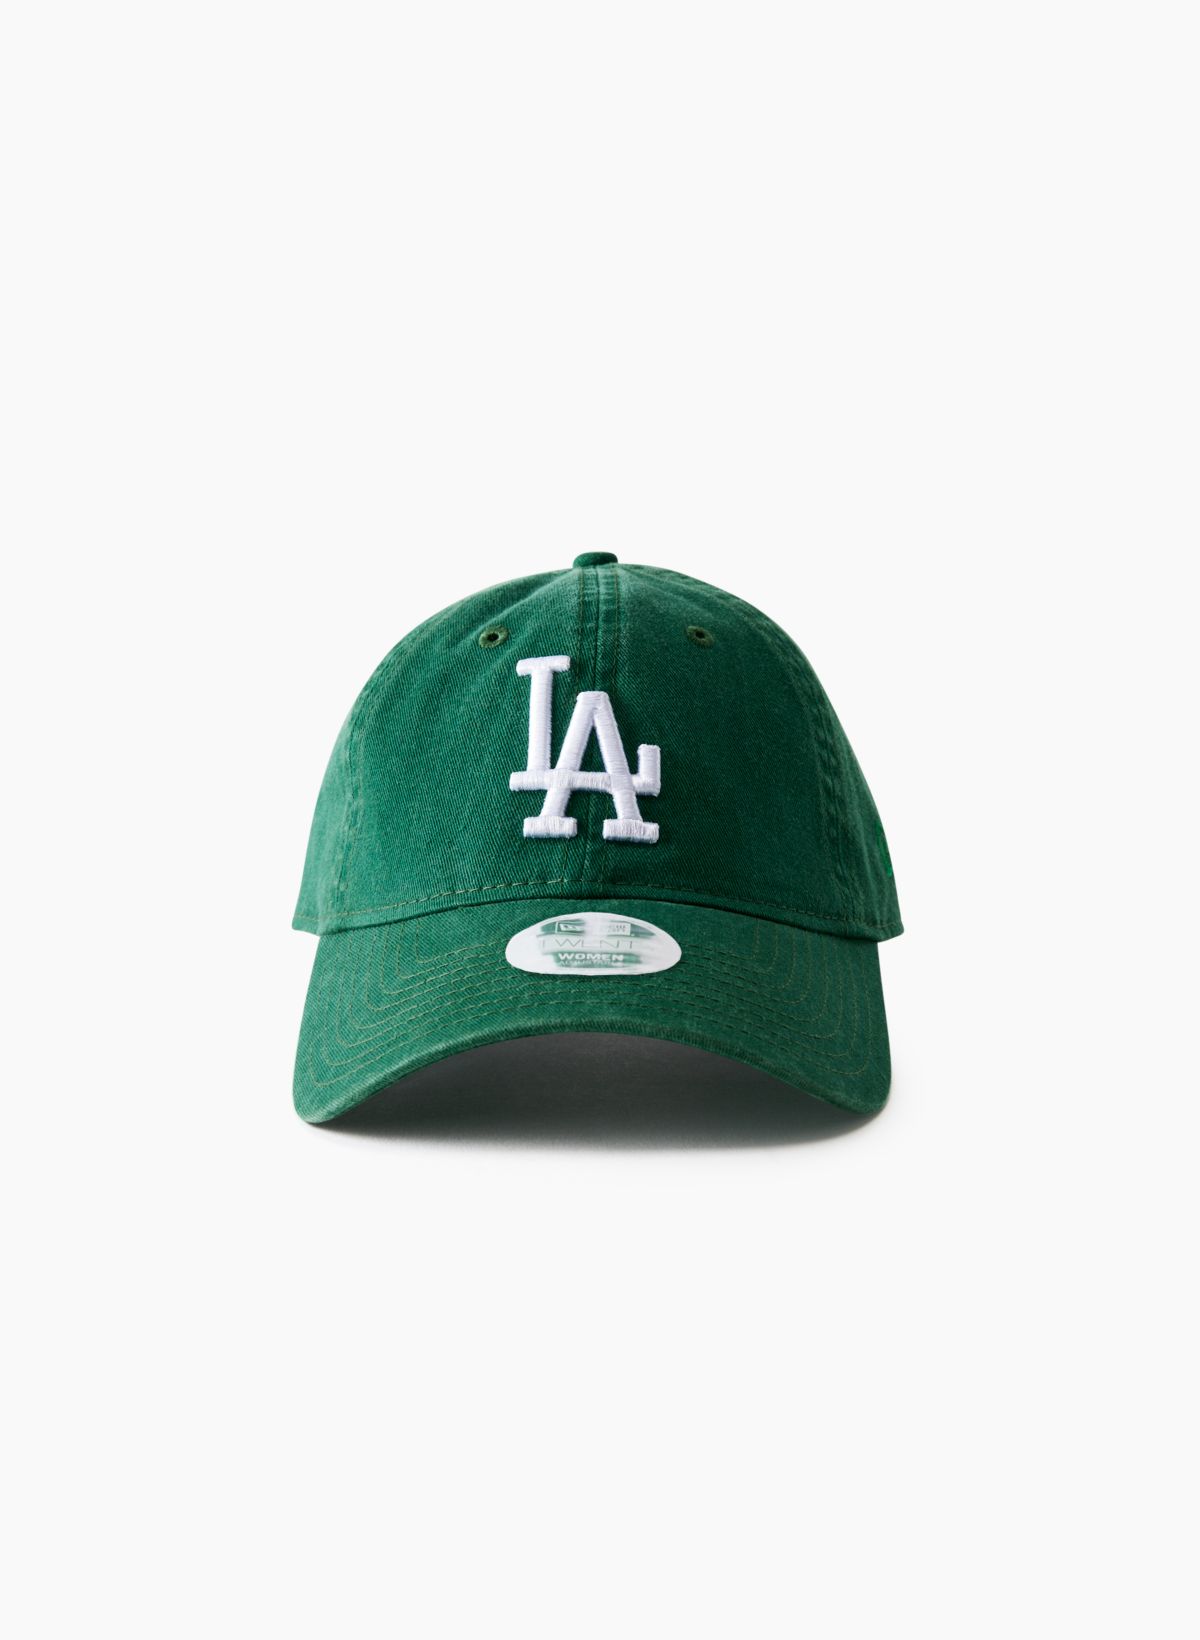 Luxury Dodgers Cap